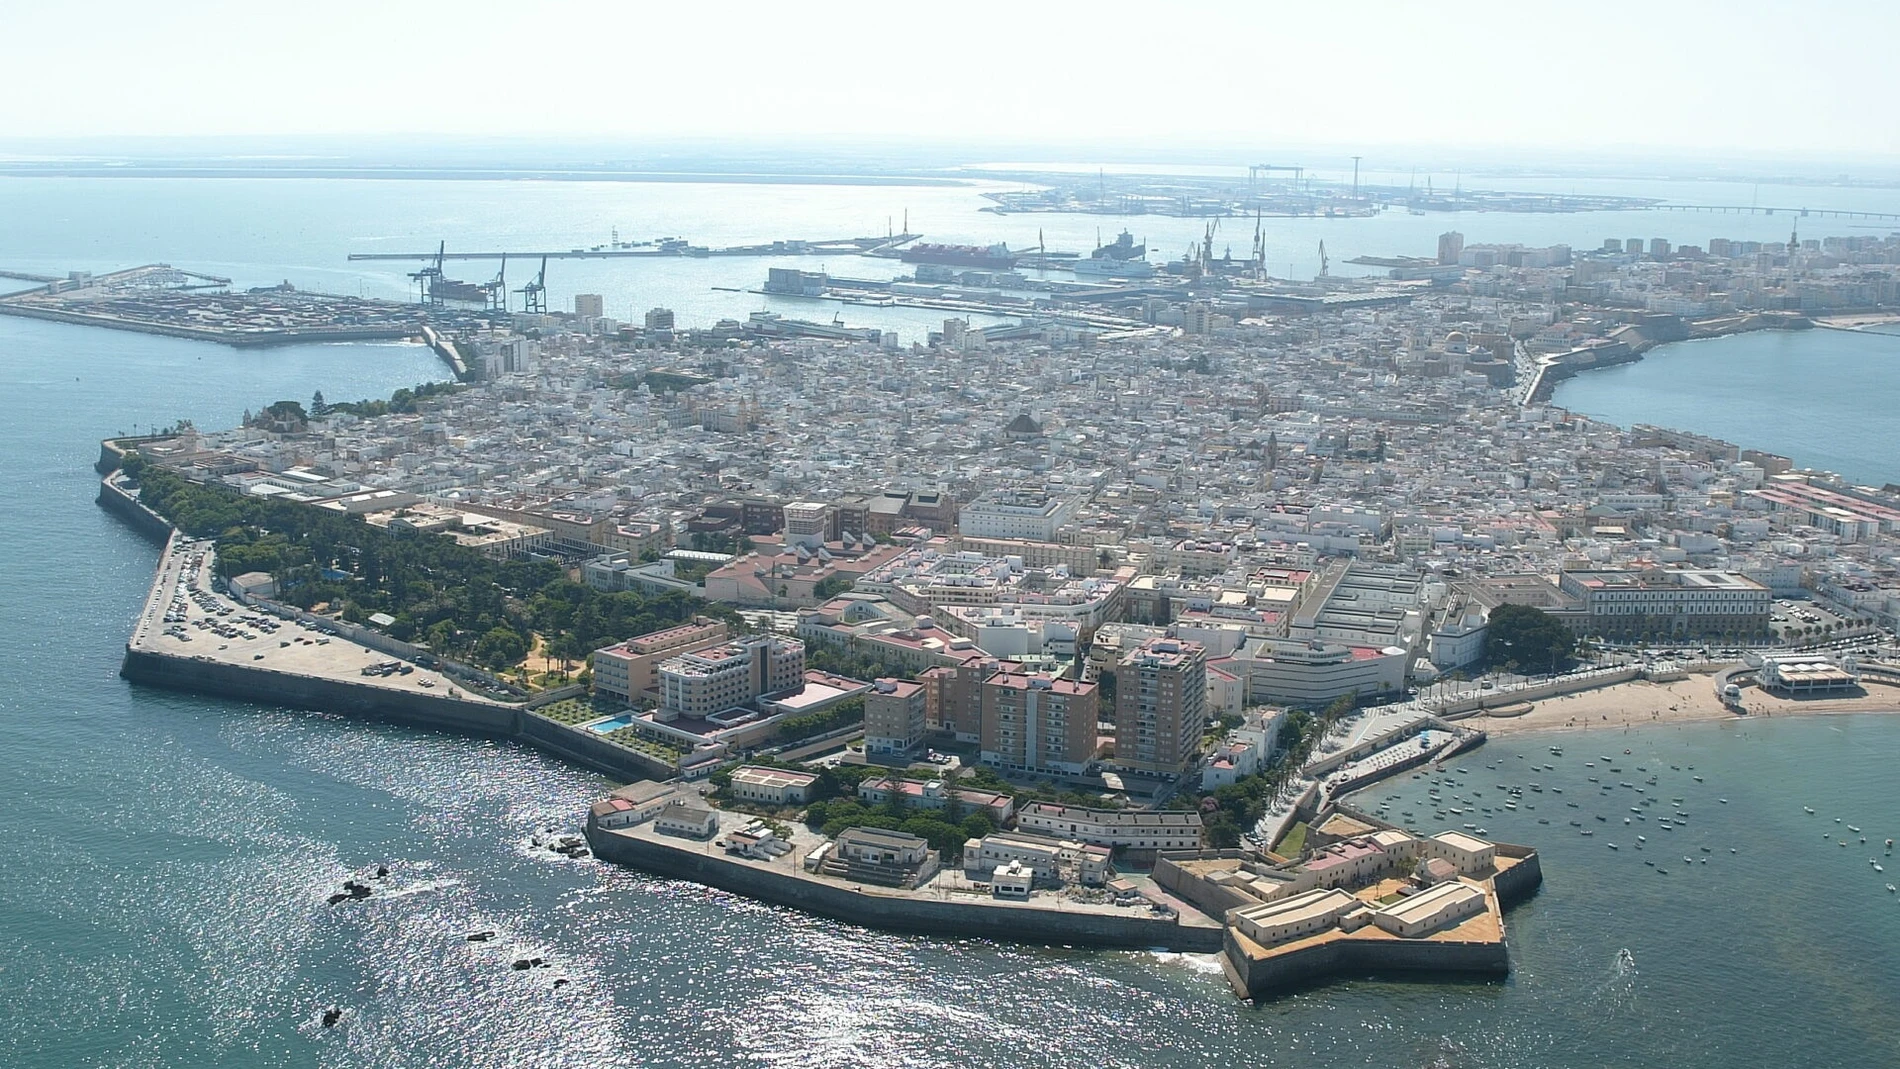 Vista aérea de la ciudad de Cádiz